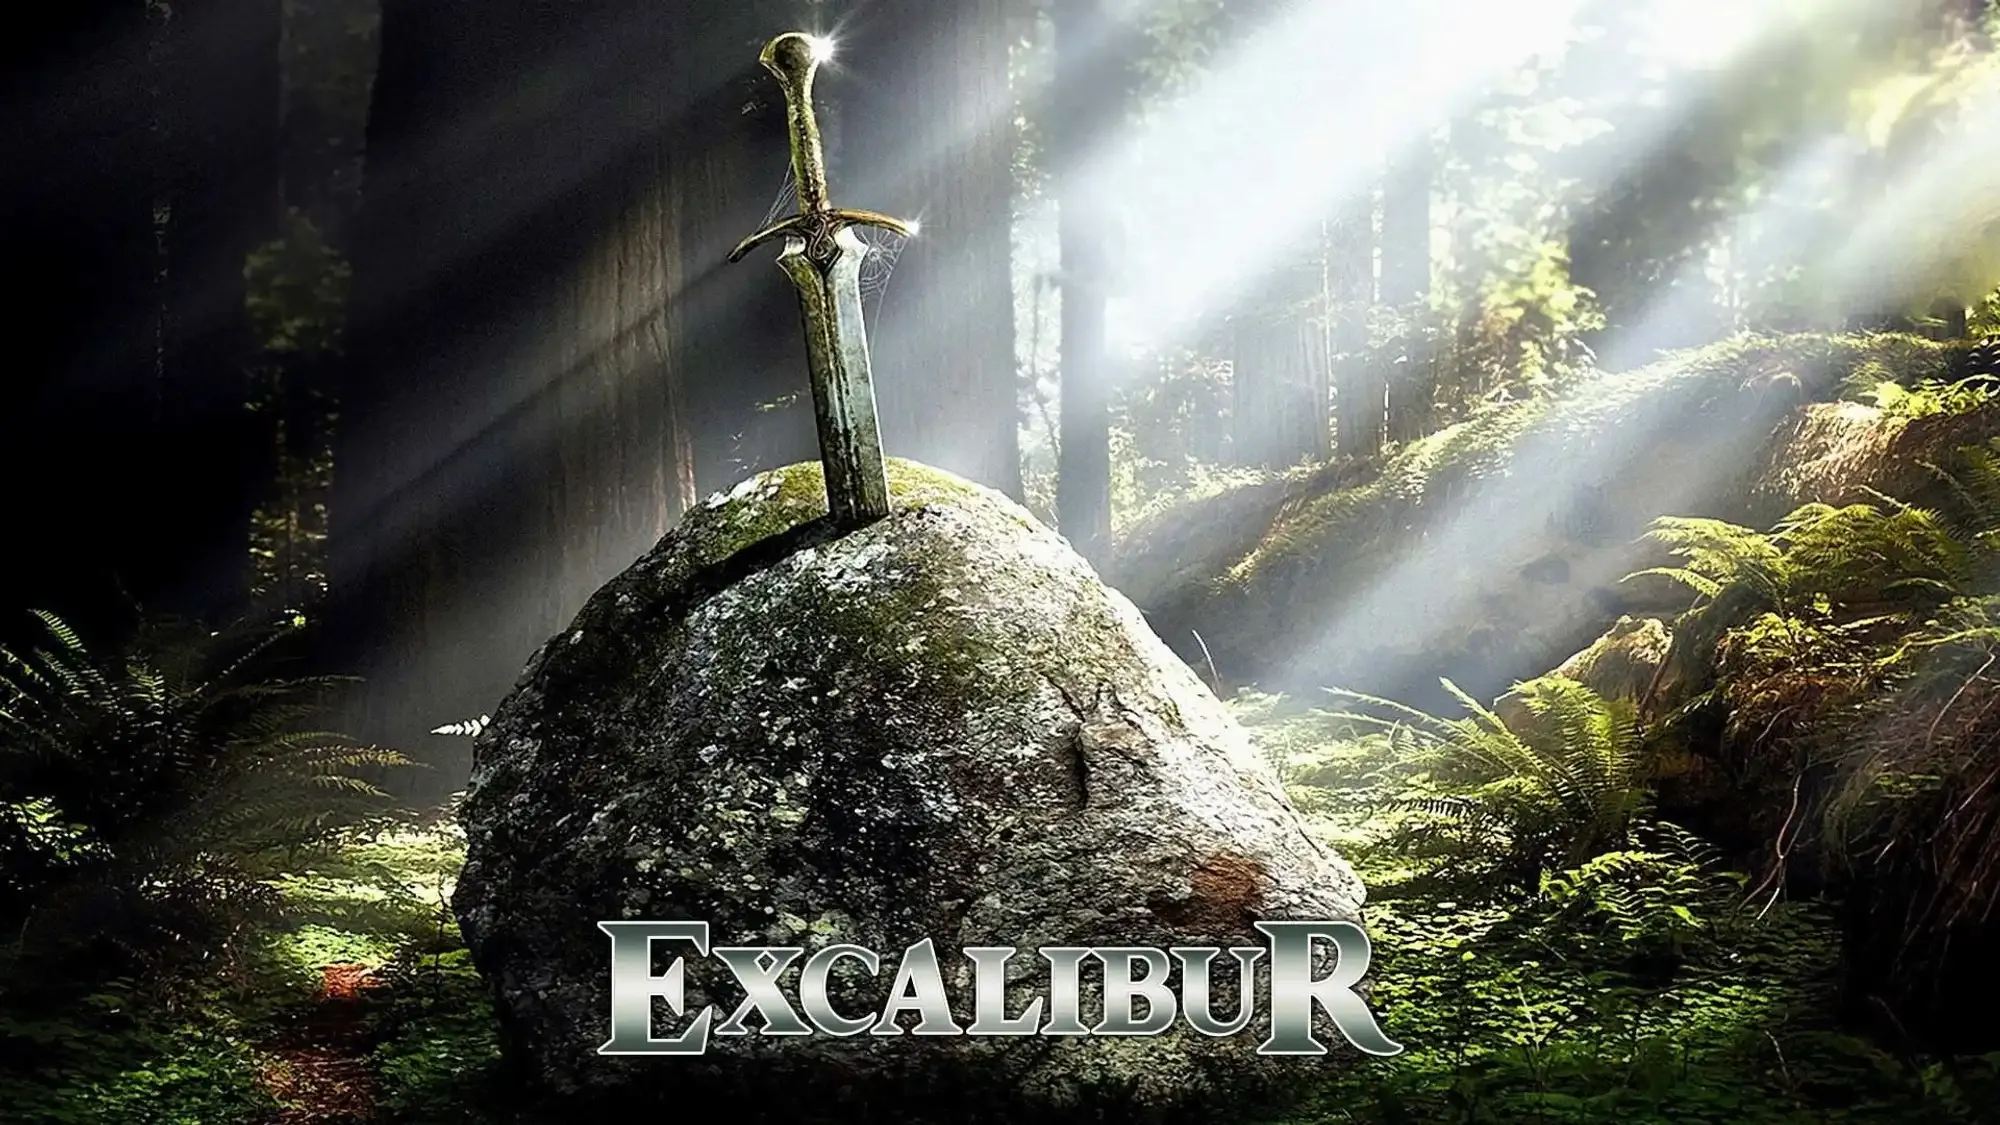 Excalibur movie review